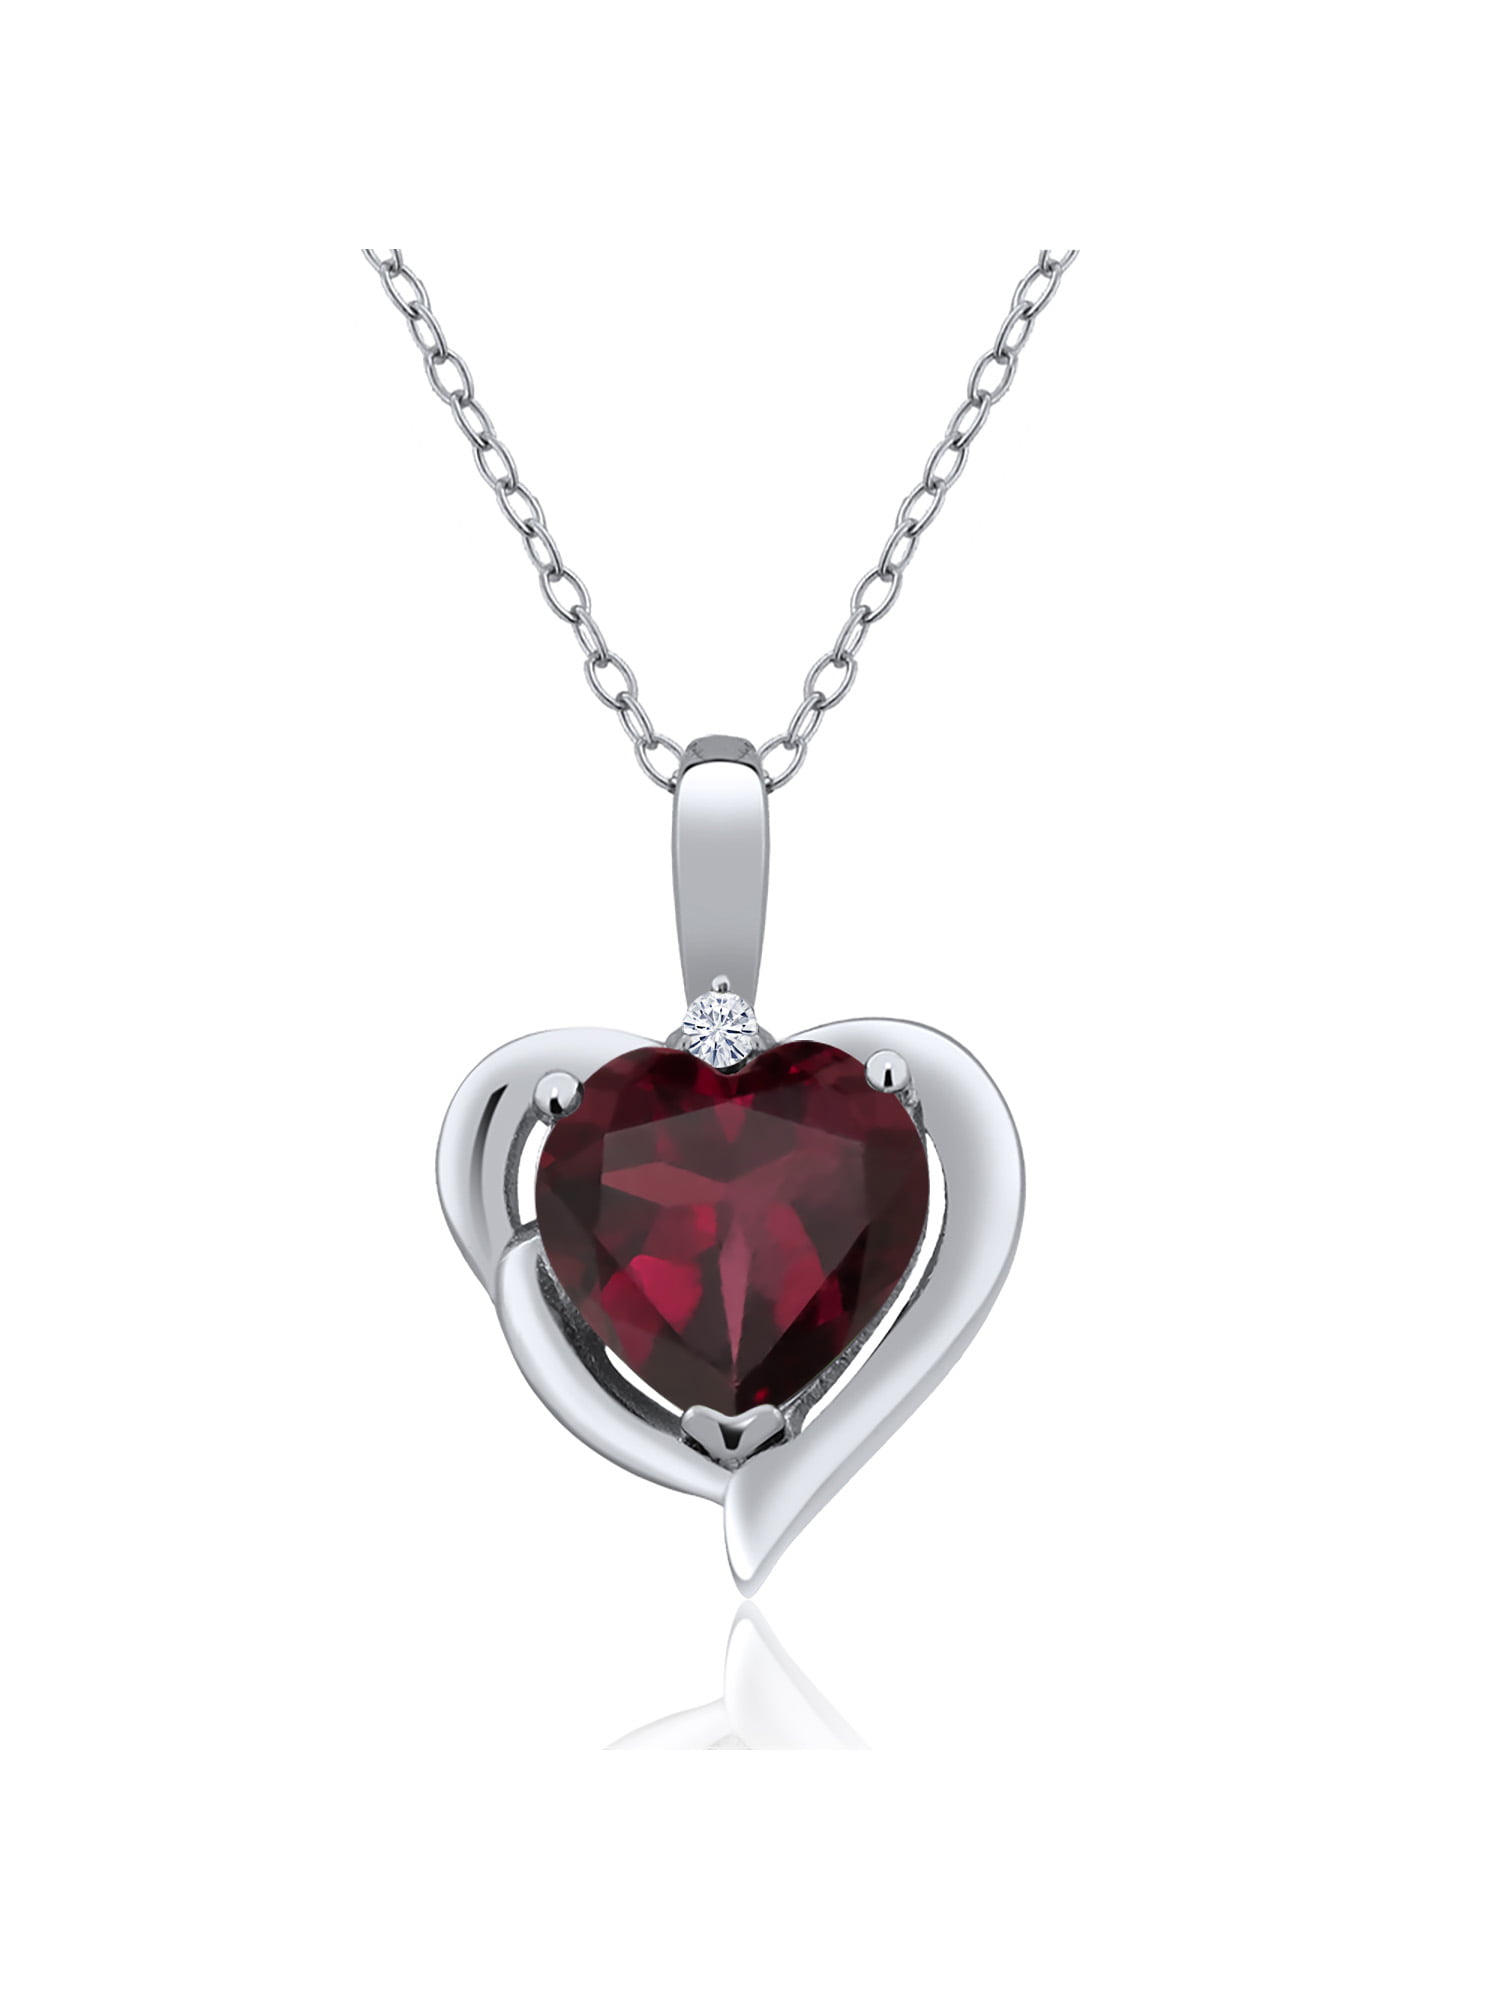 Certified 10k Gold Genuine Garnet Filigree Heart-Shaped Pendant Necklace 